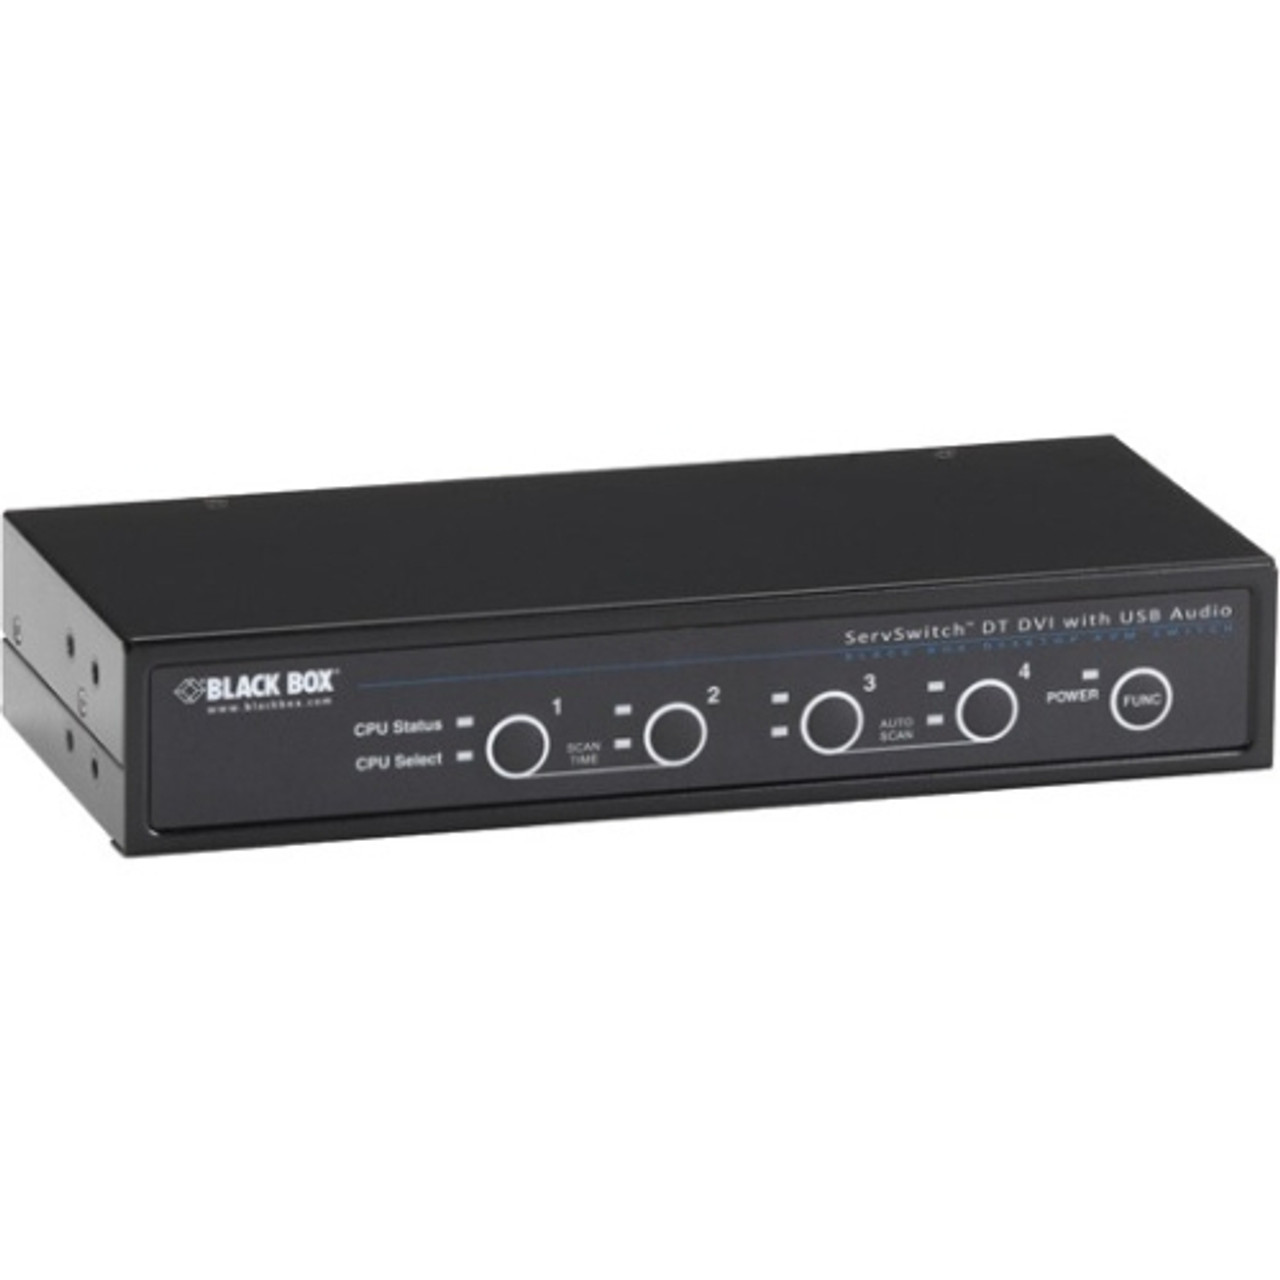 KV9634A Black Box ServSwitch DT DVI with Bidirectional Audio 4-Port